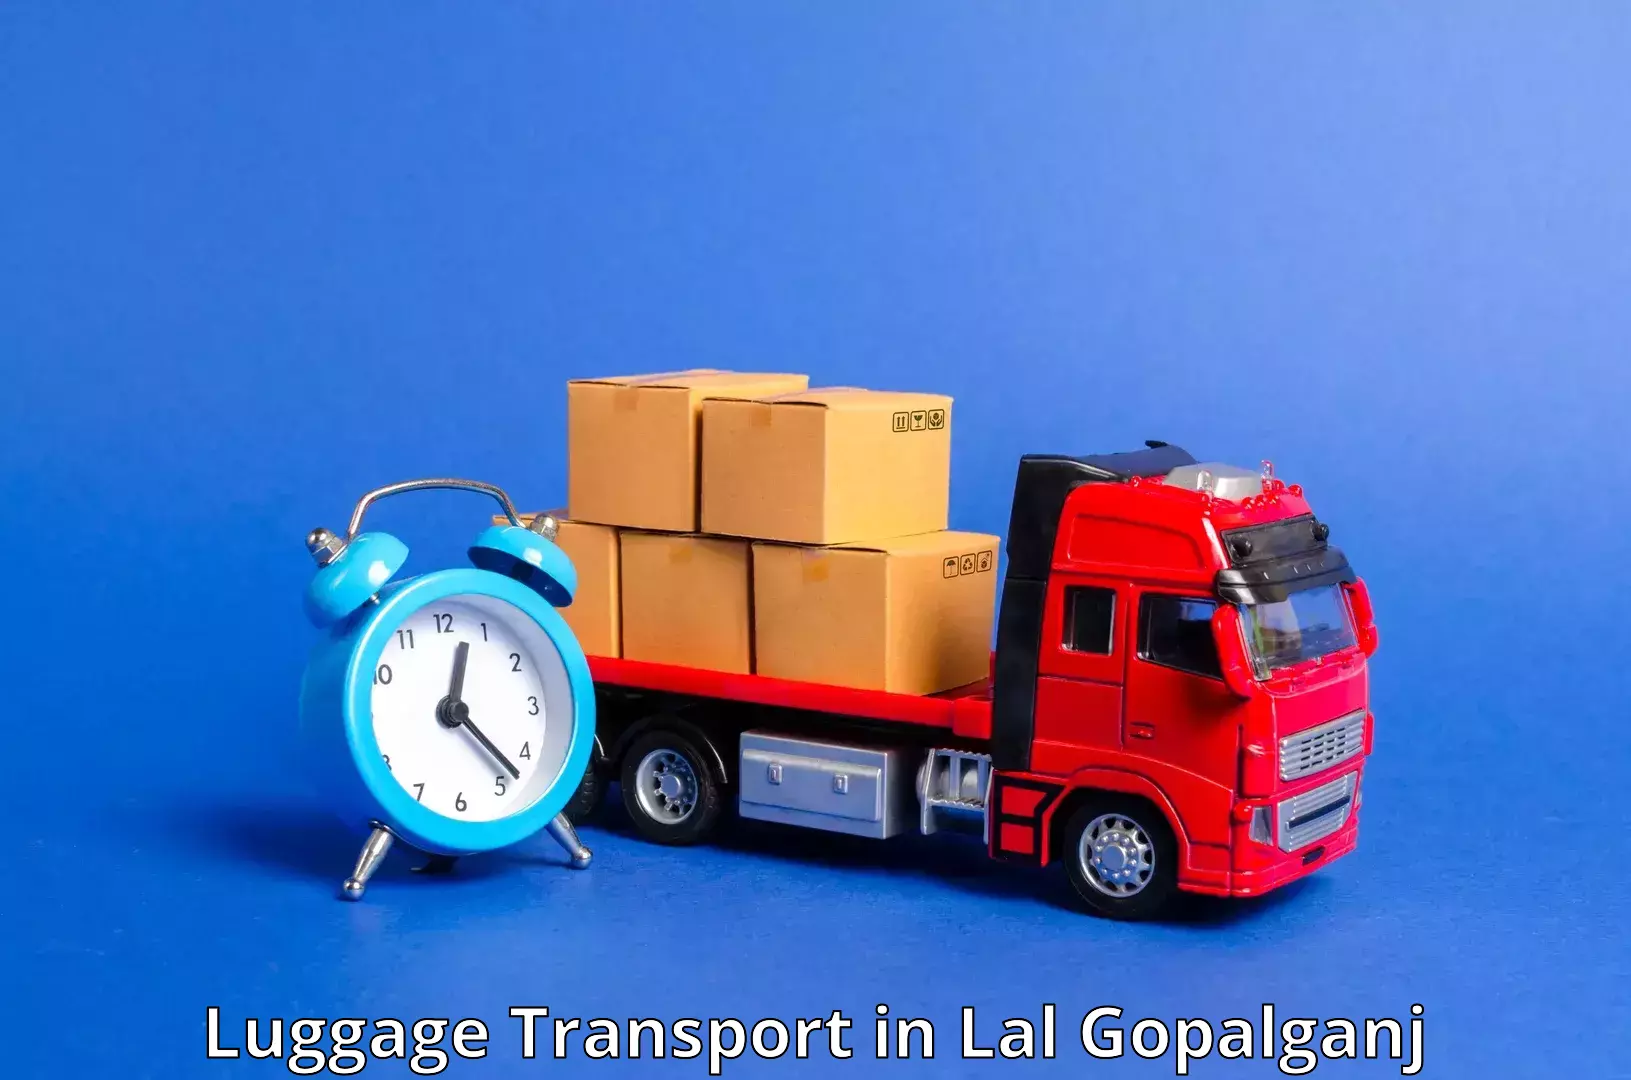 Hassle-free luggage shipping in Lal Gopalganj